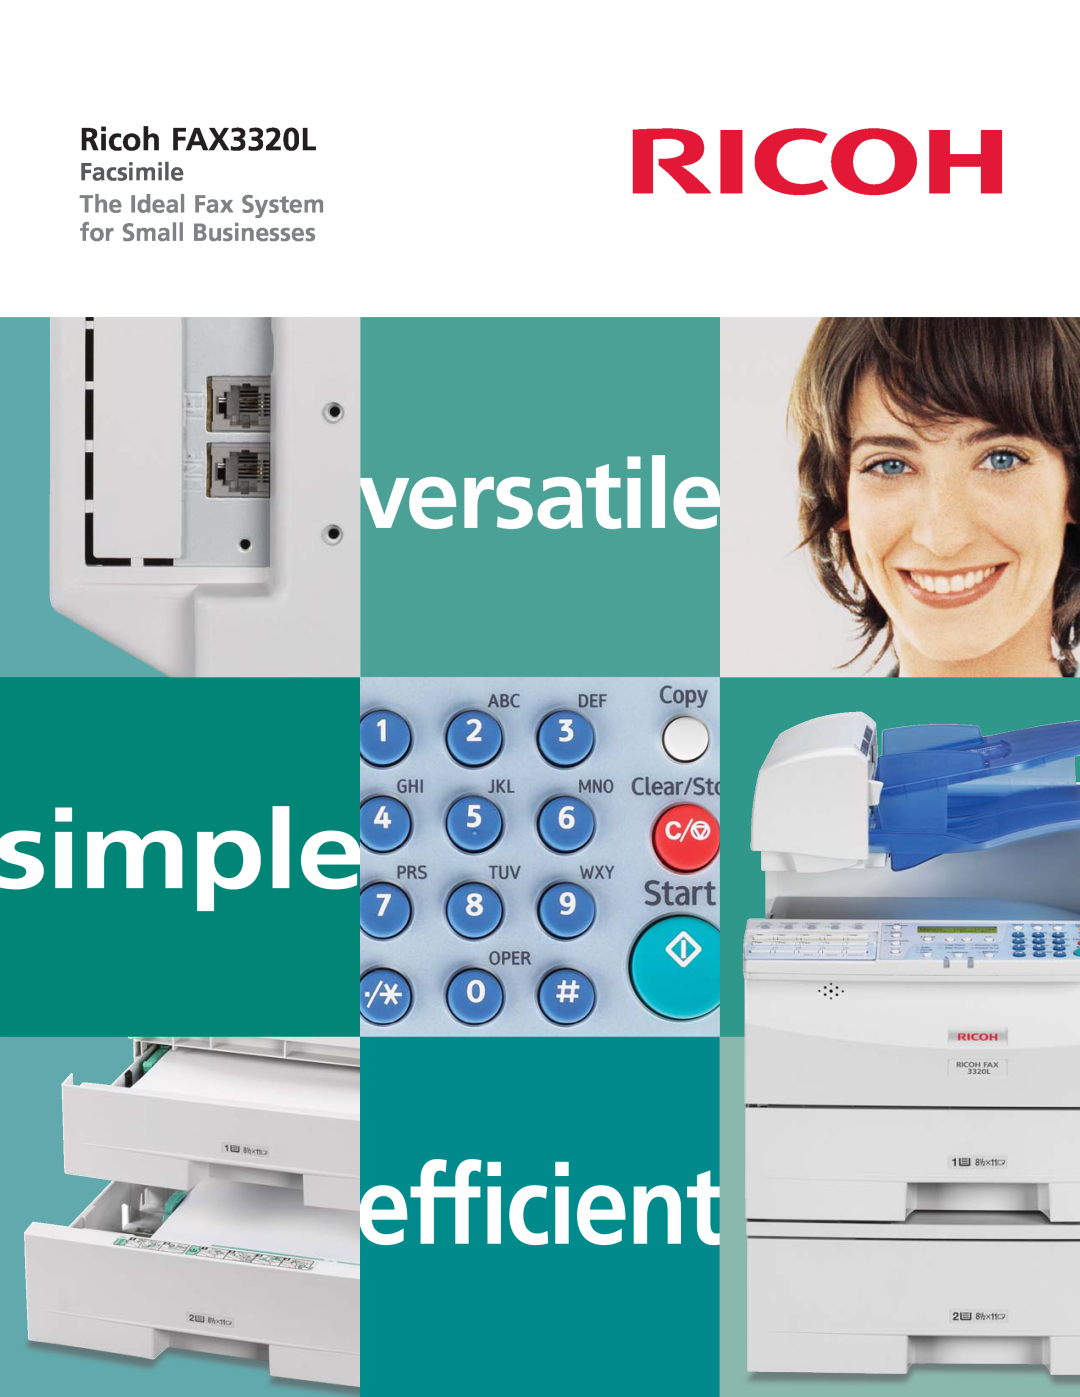 Ricoh manual efficient, simple, versatile, Ricoh FAX3320L, Facsimile, The Ideal Fax System for Small Businesses 